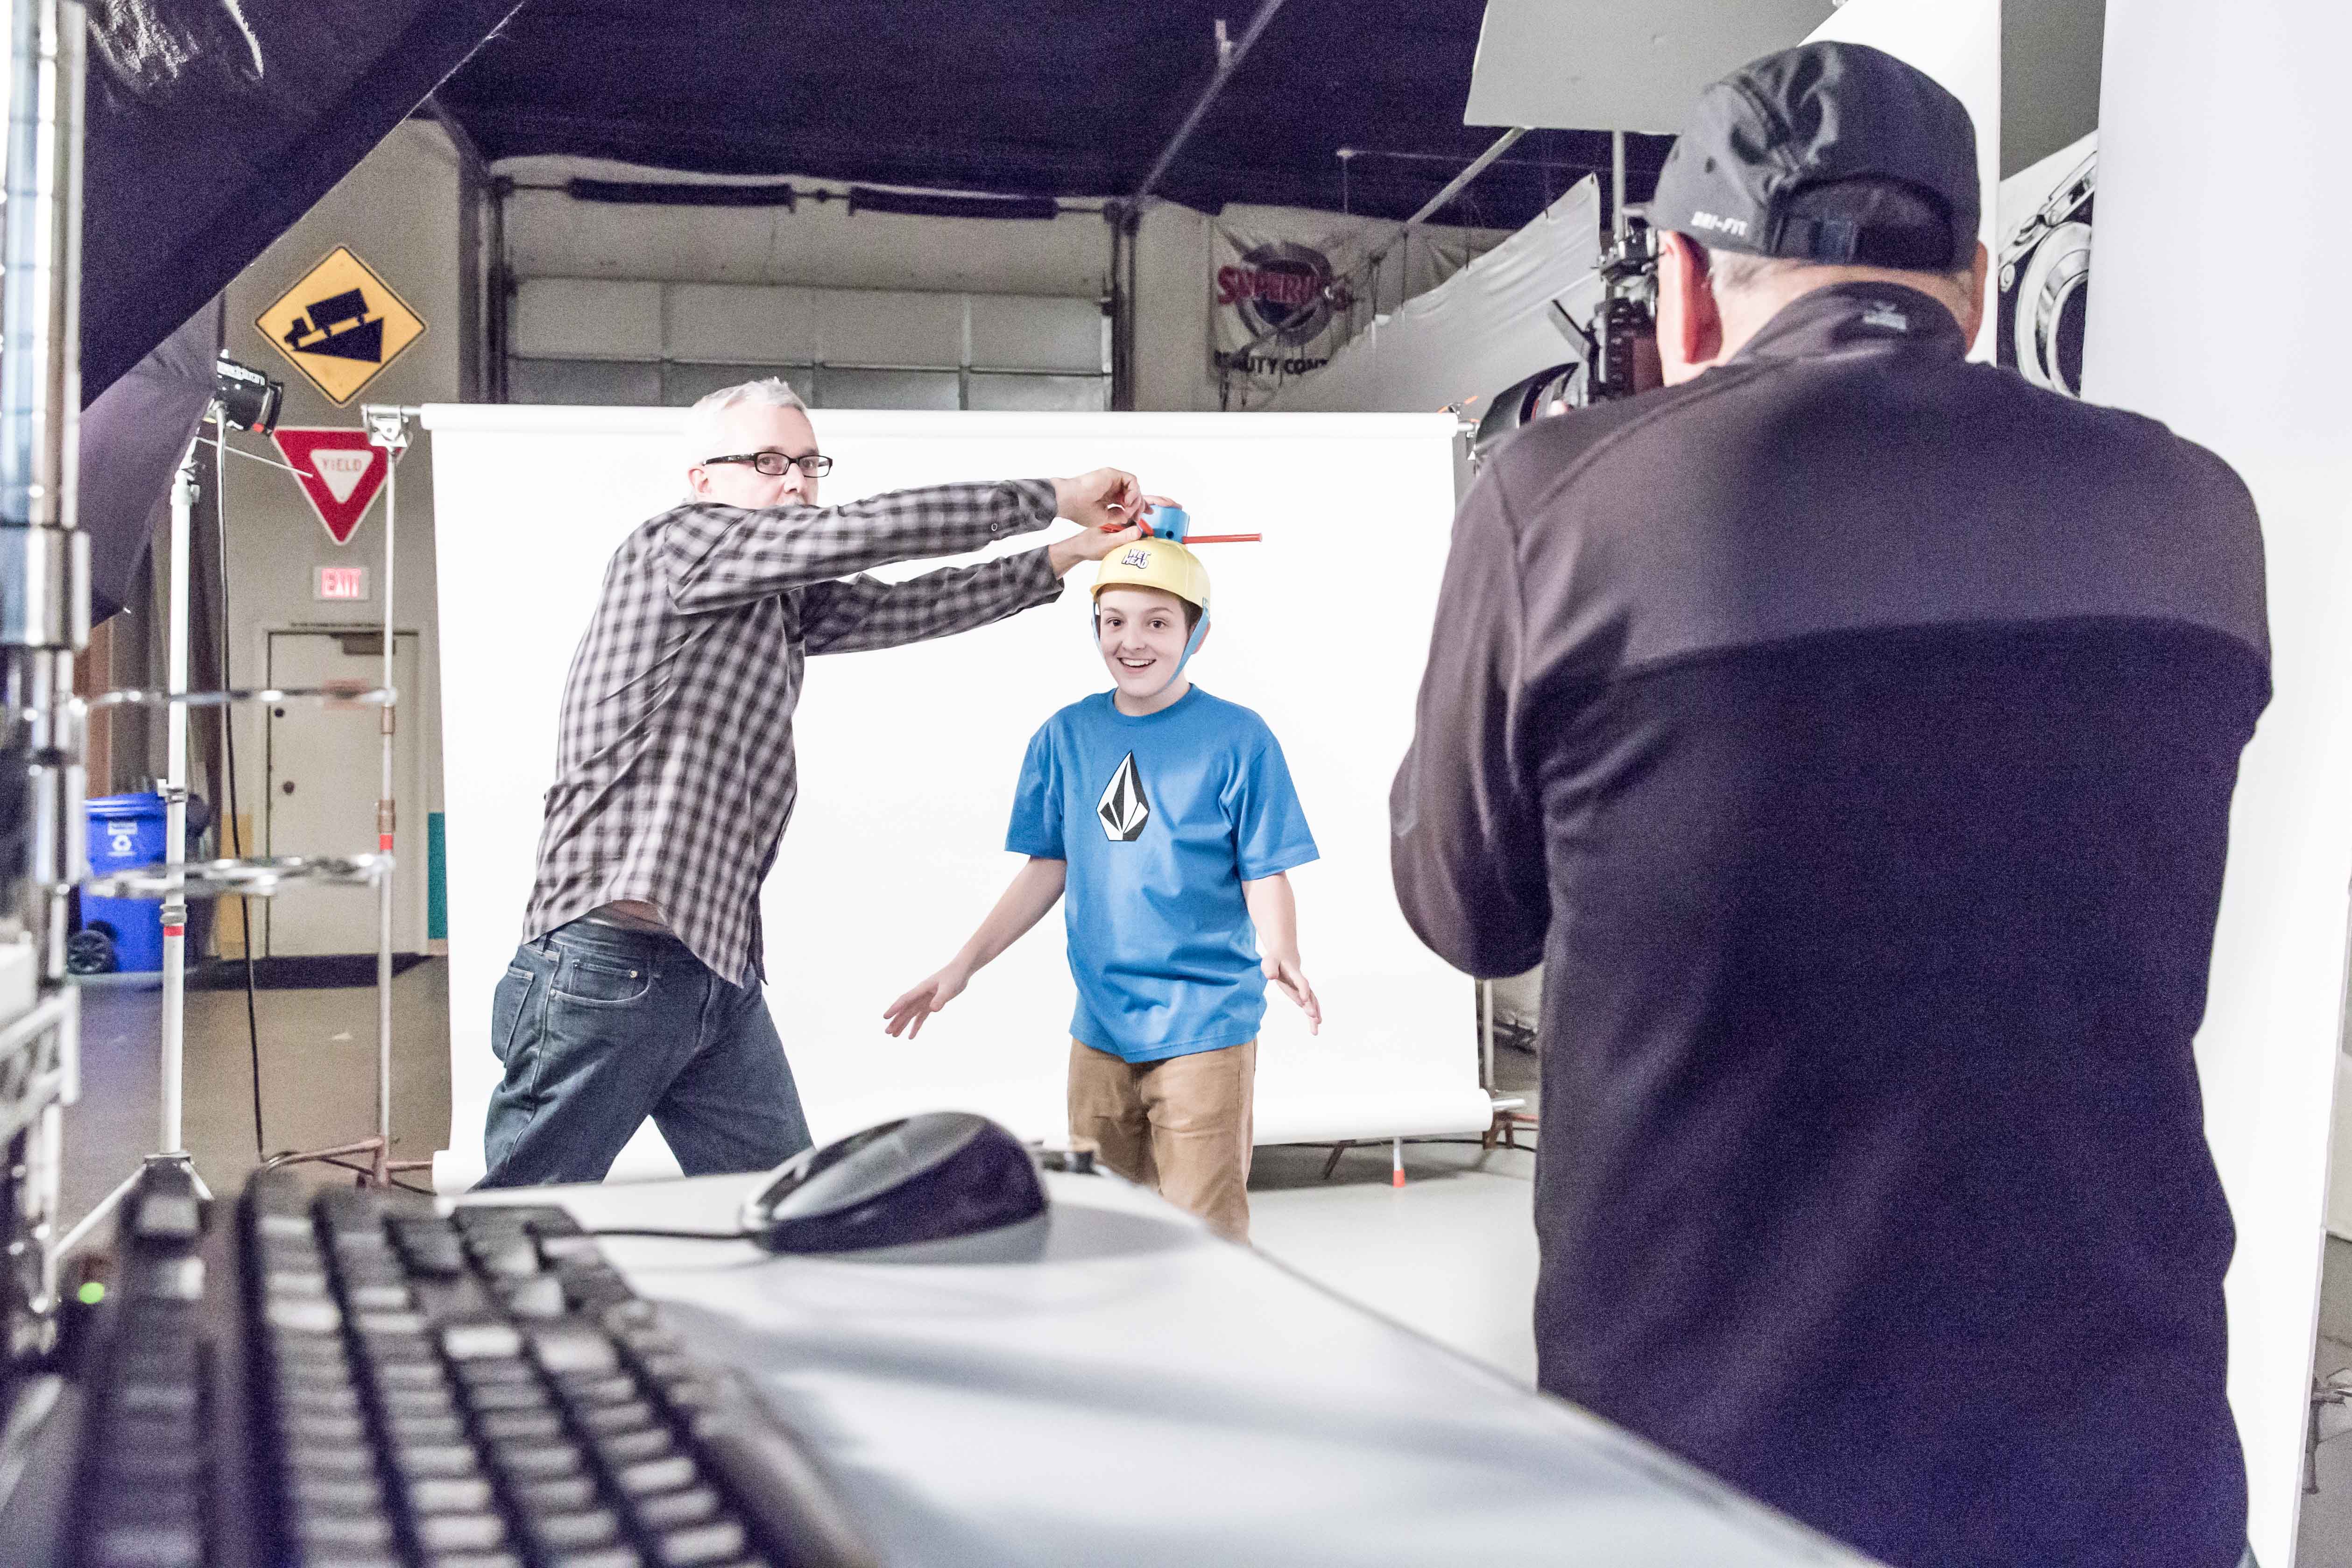 Setting up shot with fun hat  — Studio 3, Inc.